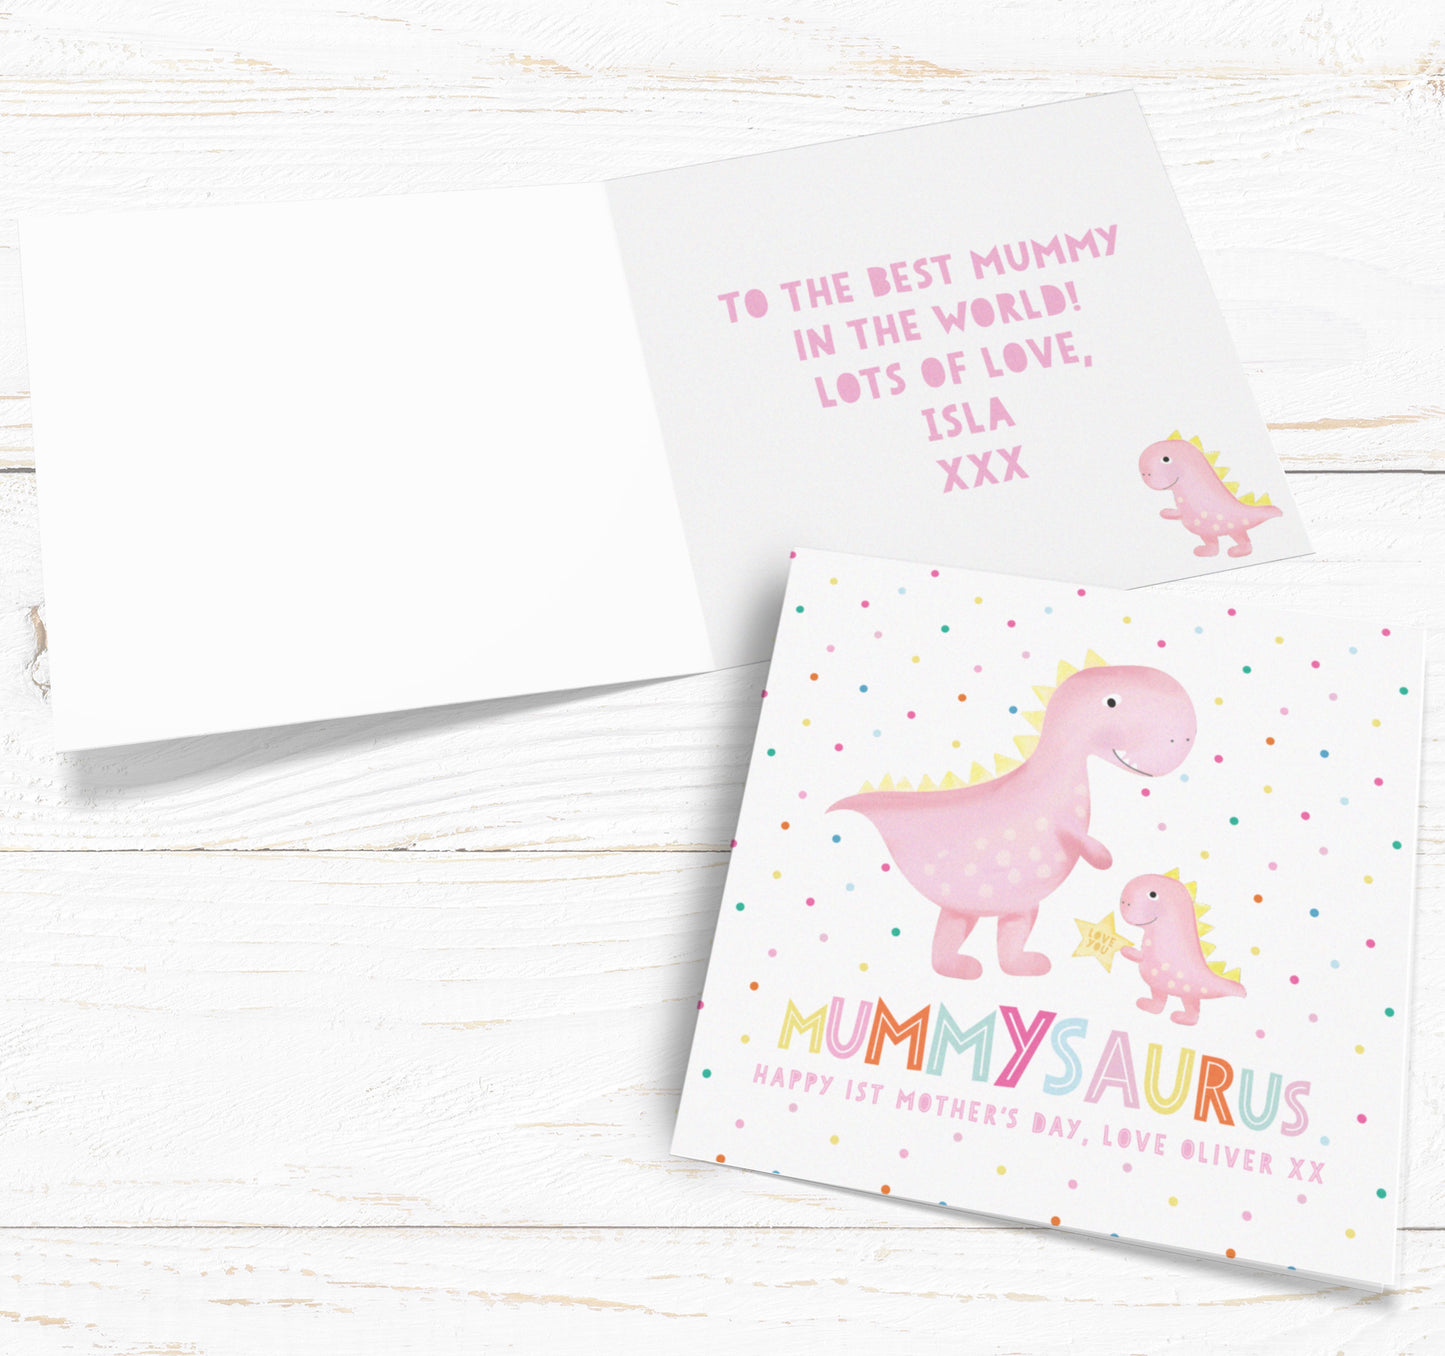 Mummysaurus Card. Cute Dinosaur Card. Cute Mother’s Day Card. Personalised Mother’s Day Card. For Mum. Send Direct Option.